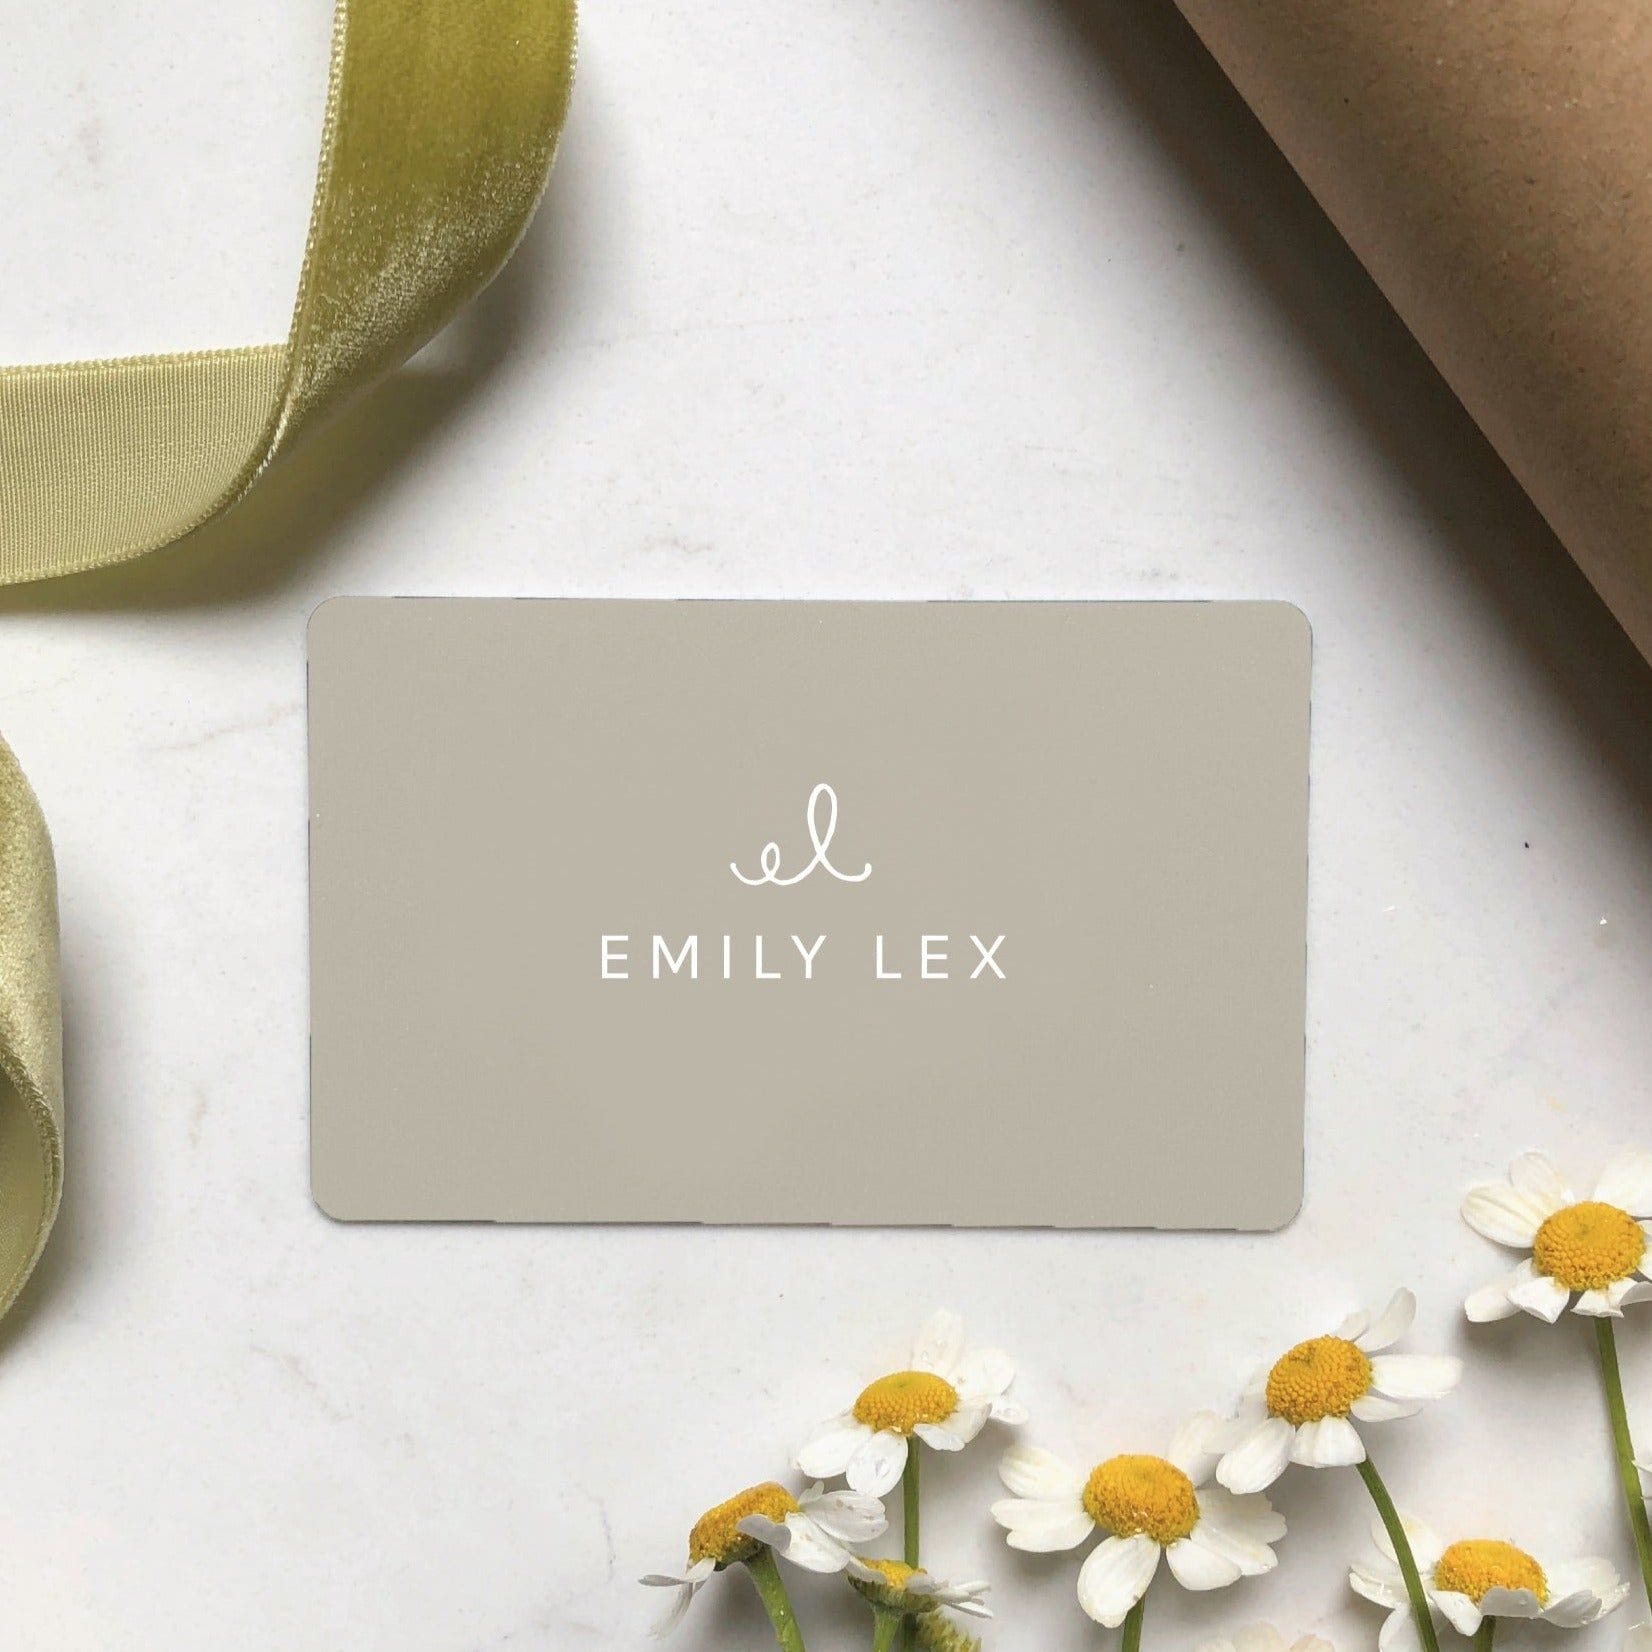 emily lex studio gift card - emily lex studio